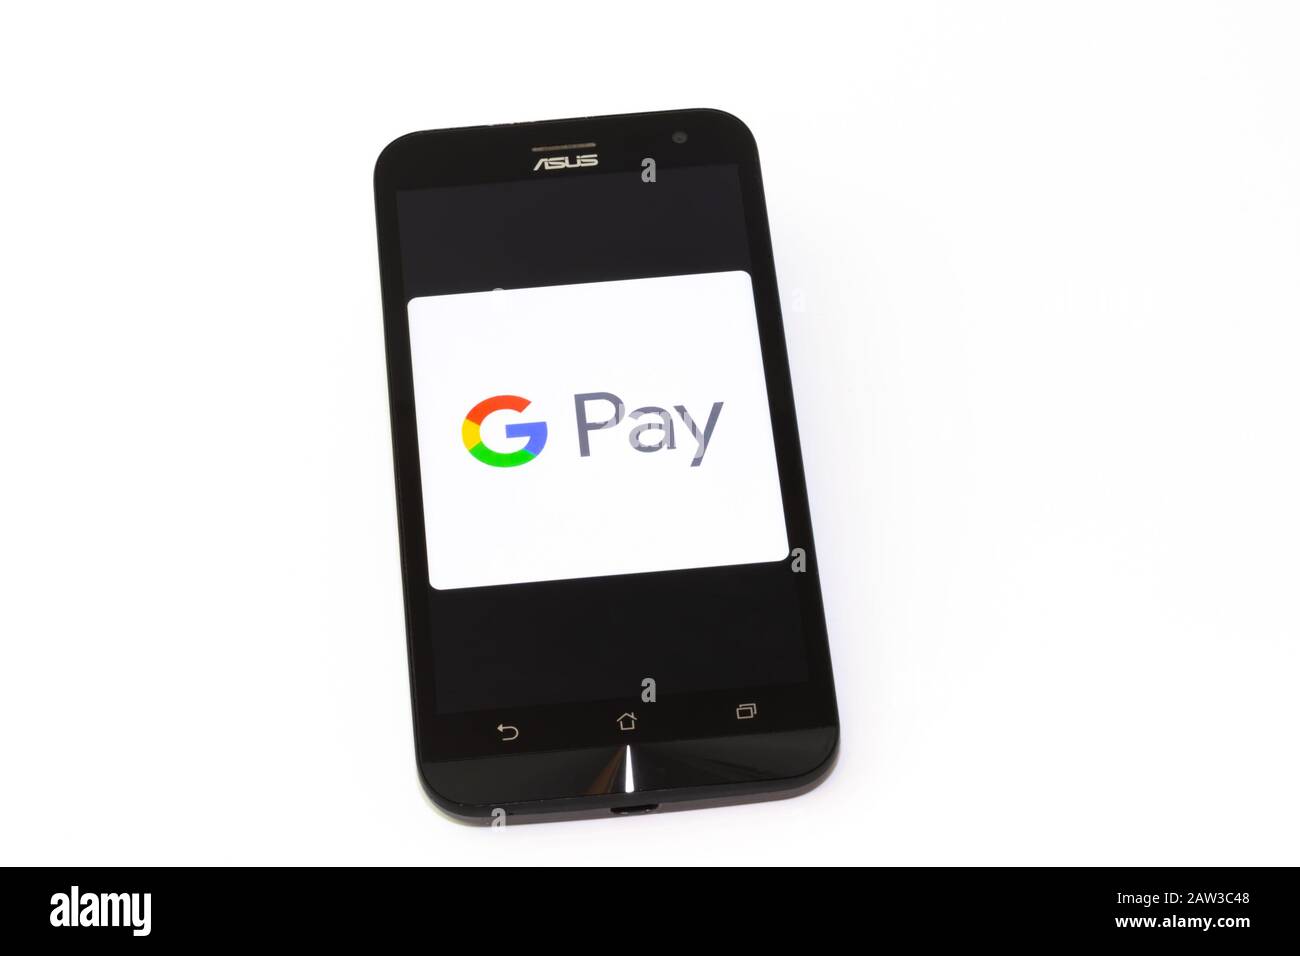 Kouvola, Finland - 23 January 2020: Google Pay app logo on the screen of smartphone Asus Stock Photo